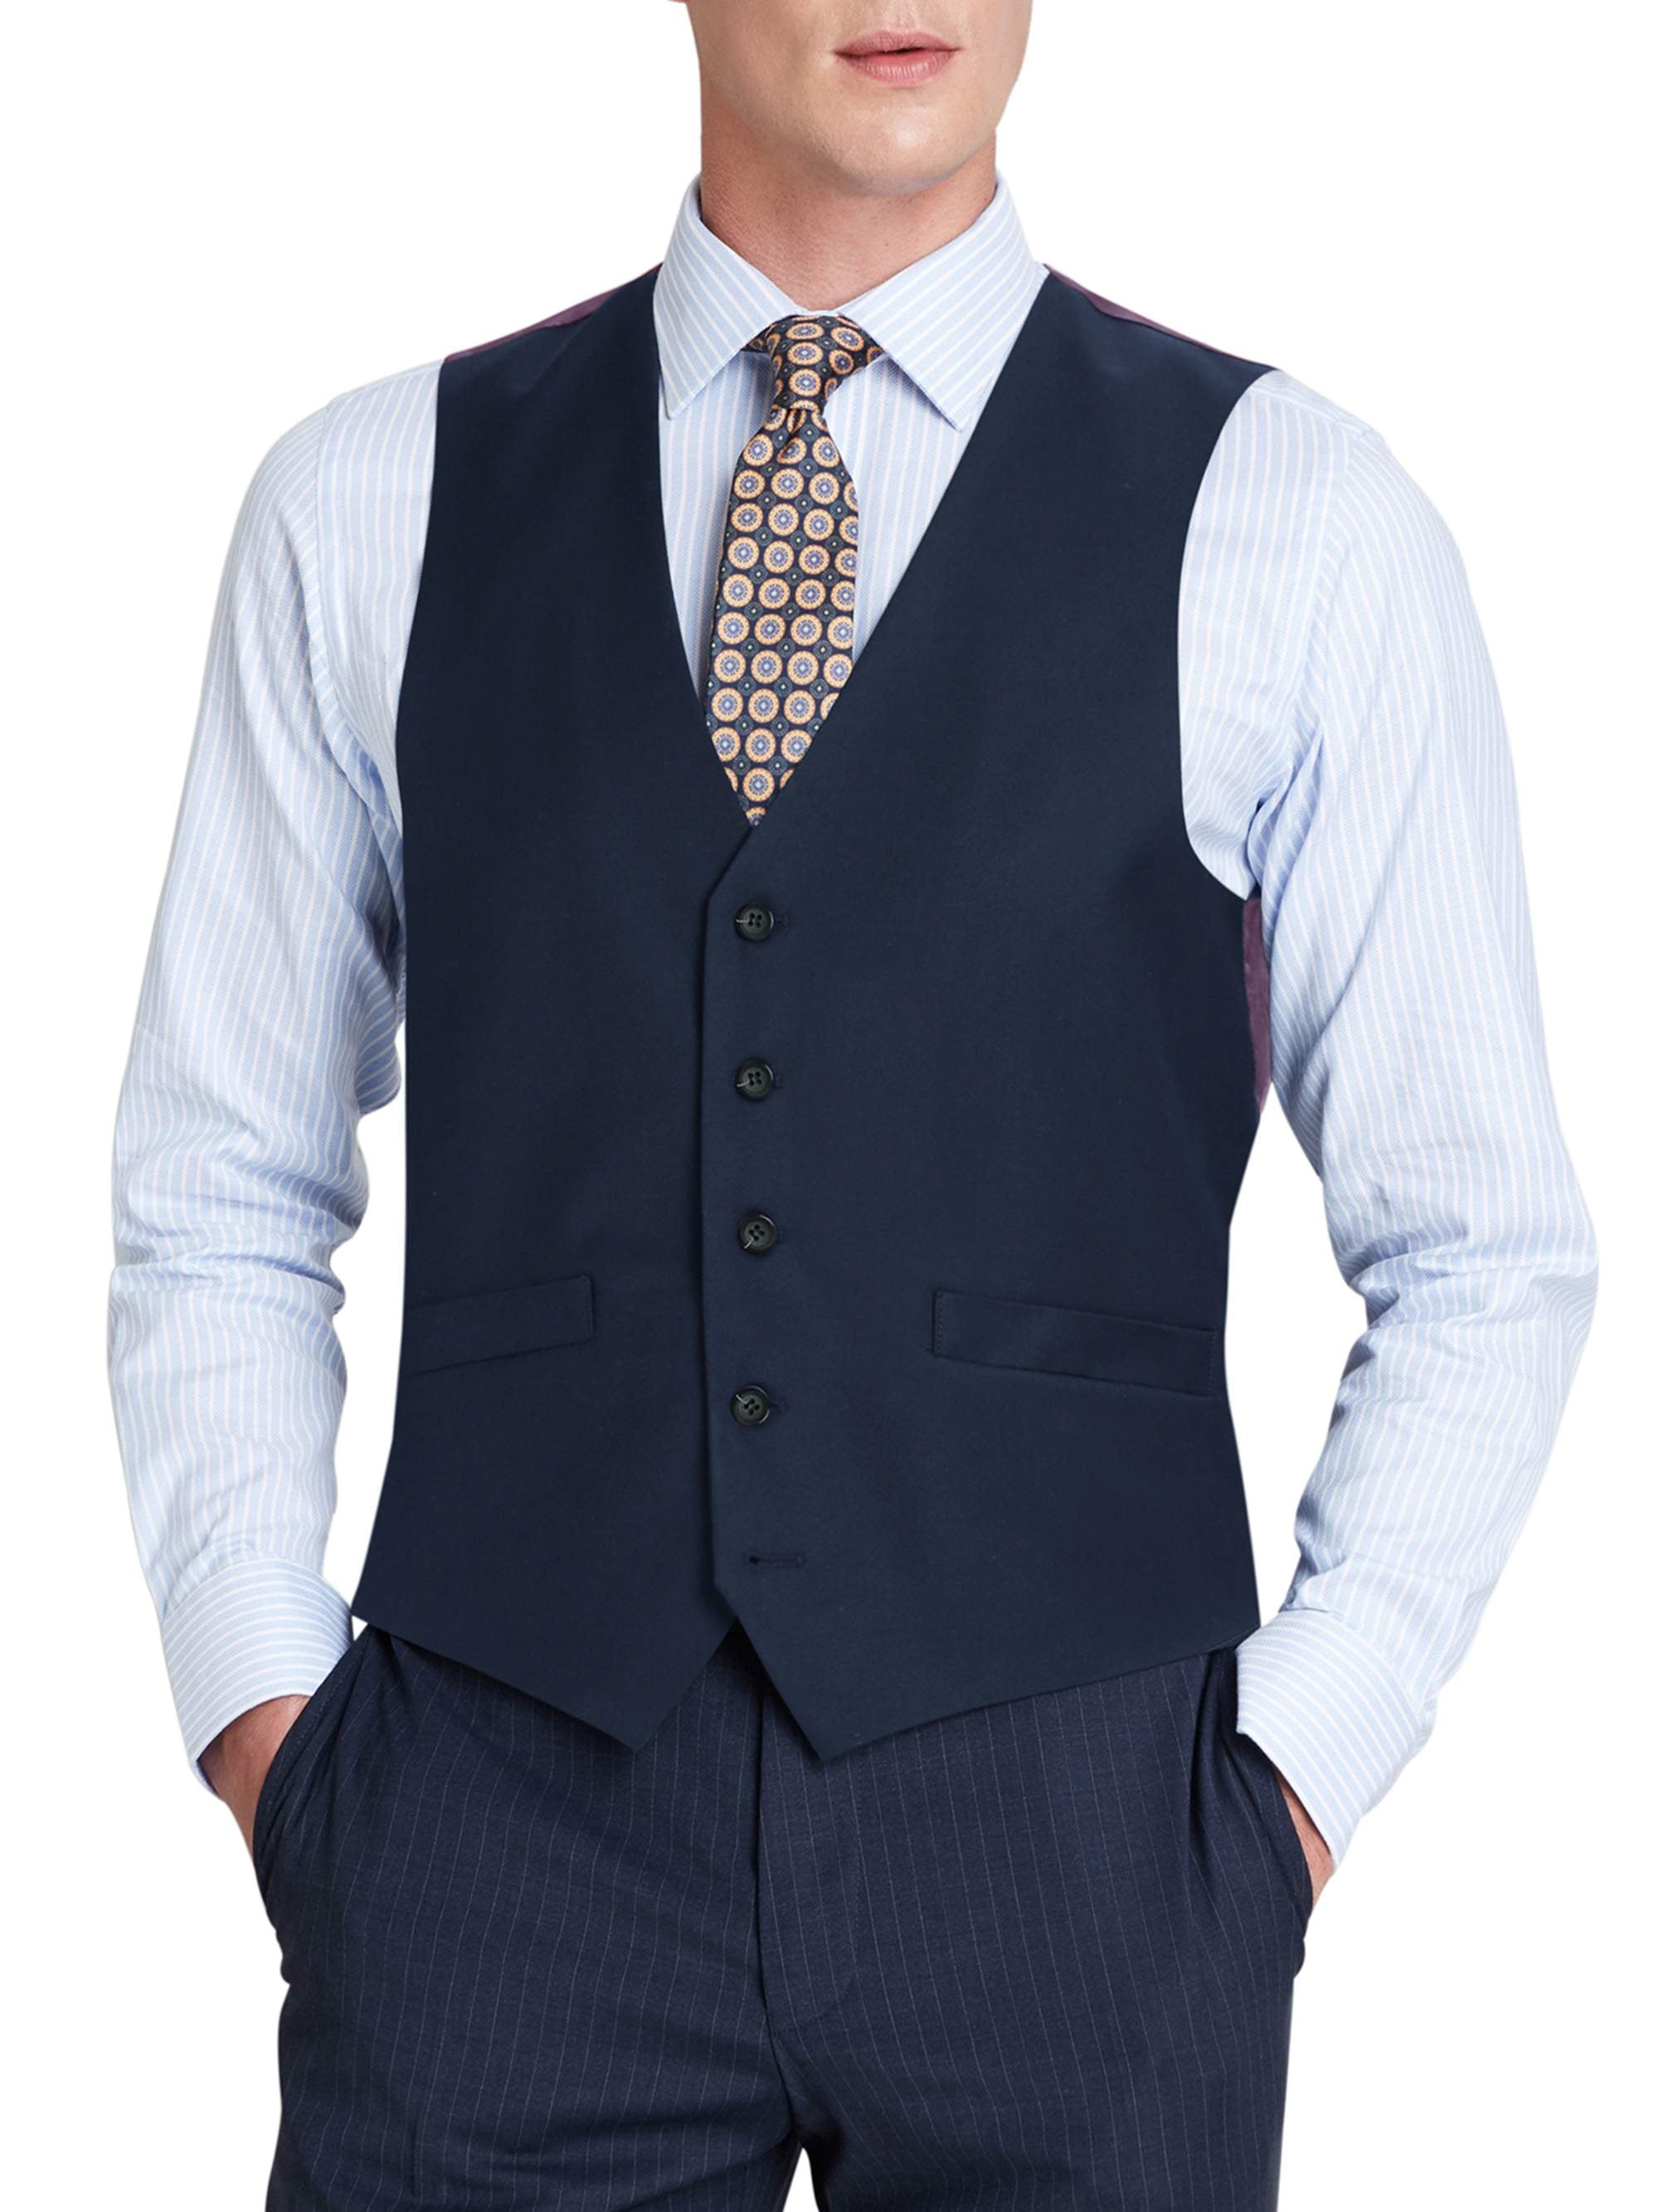 Alizeal Mens Classic Solid Color Business Suit Vest Regular Fit Tuxedo Waistcoat